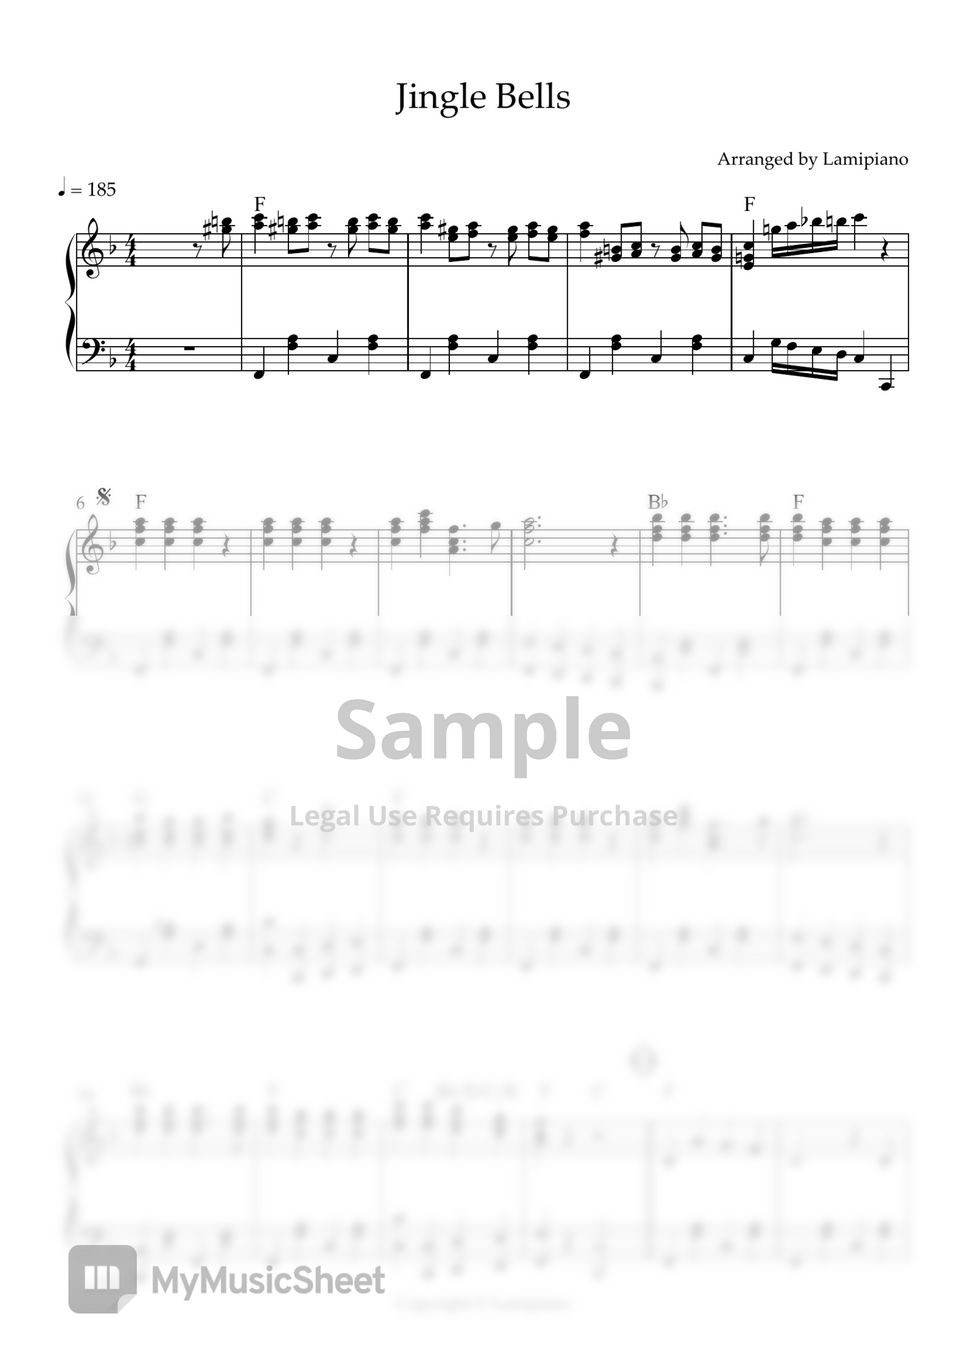 Jingle Bells (Christmas Carol / Jazz / Chords) Partitura by Lamipiano